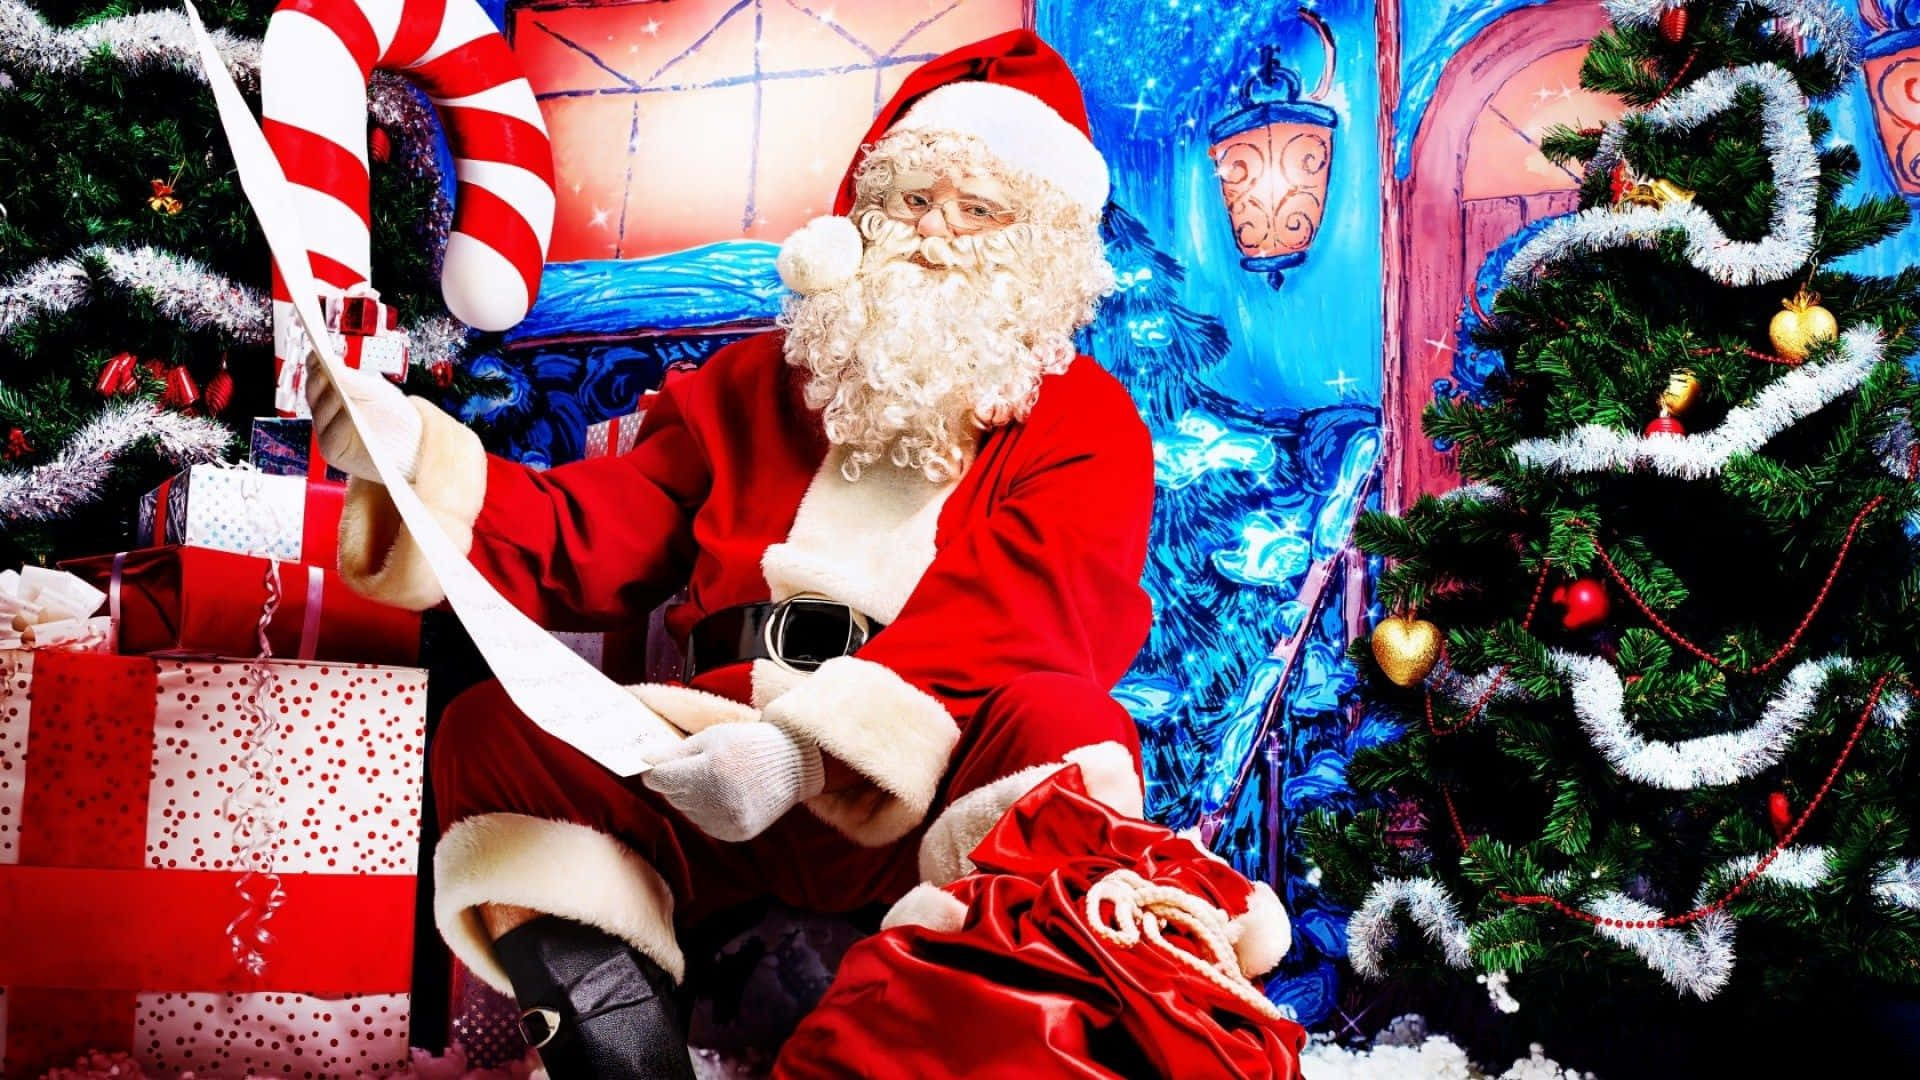 Santa Claus spreading holiday cheer